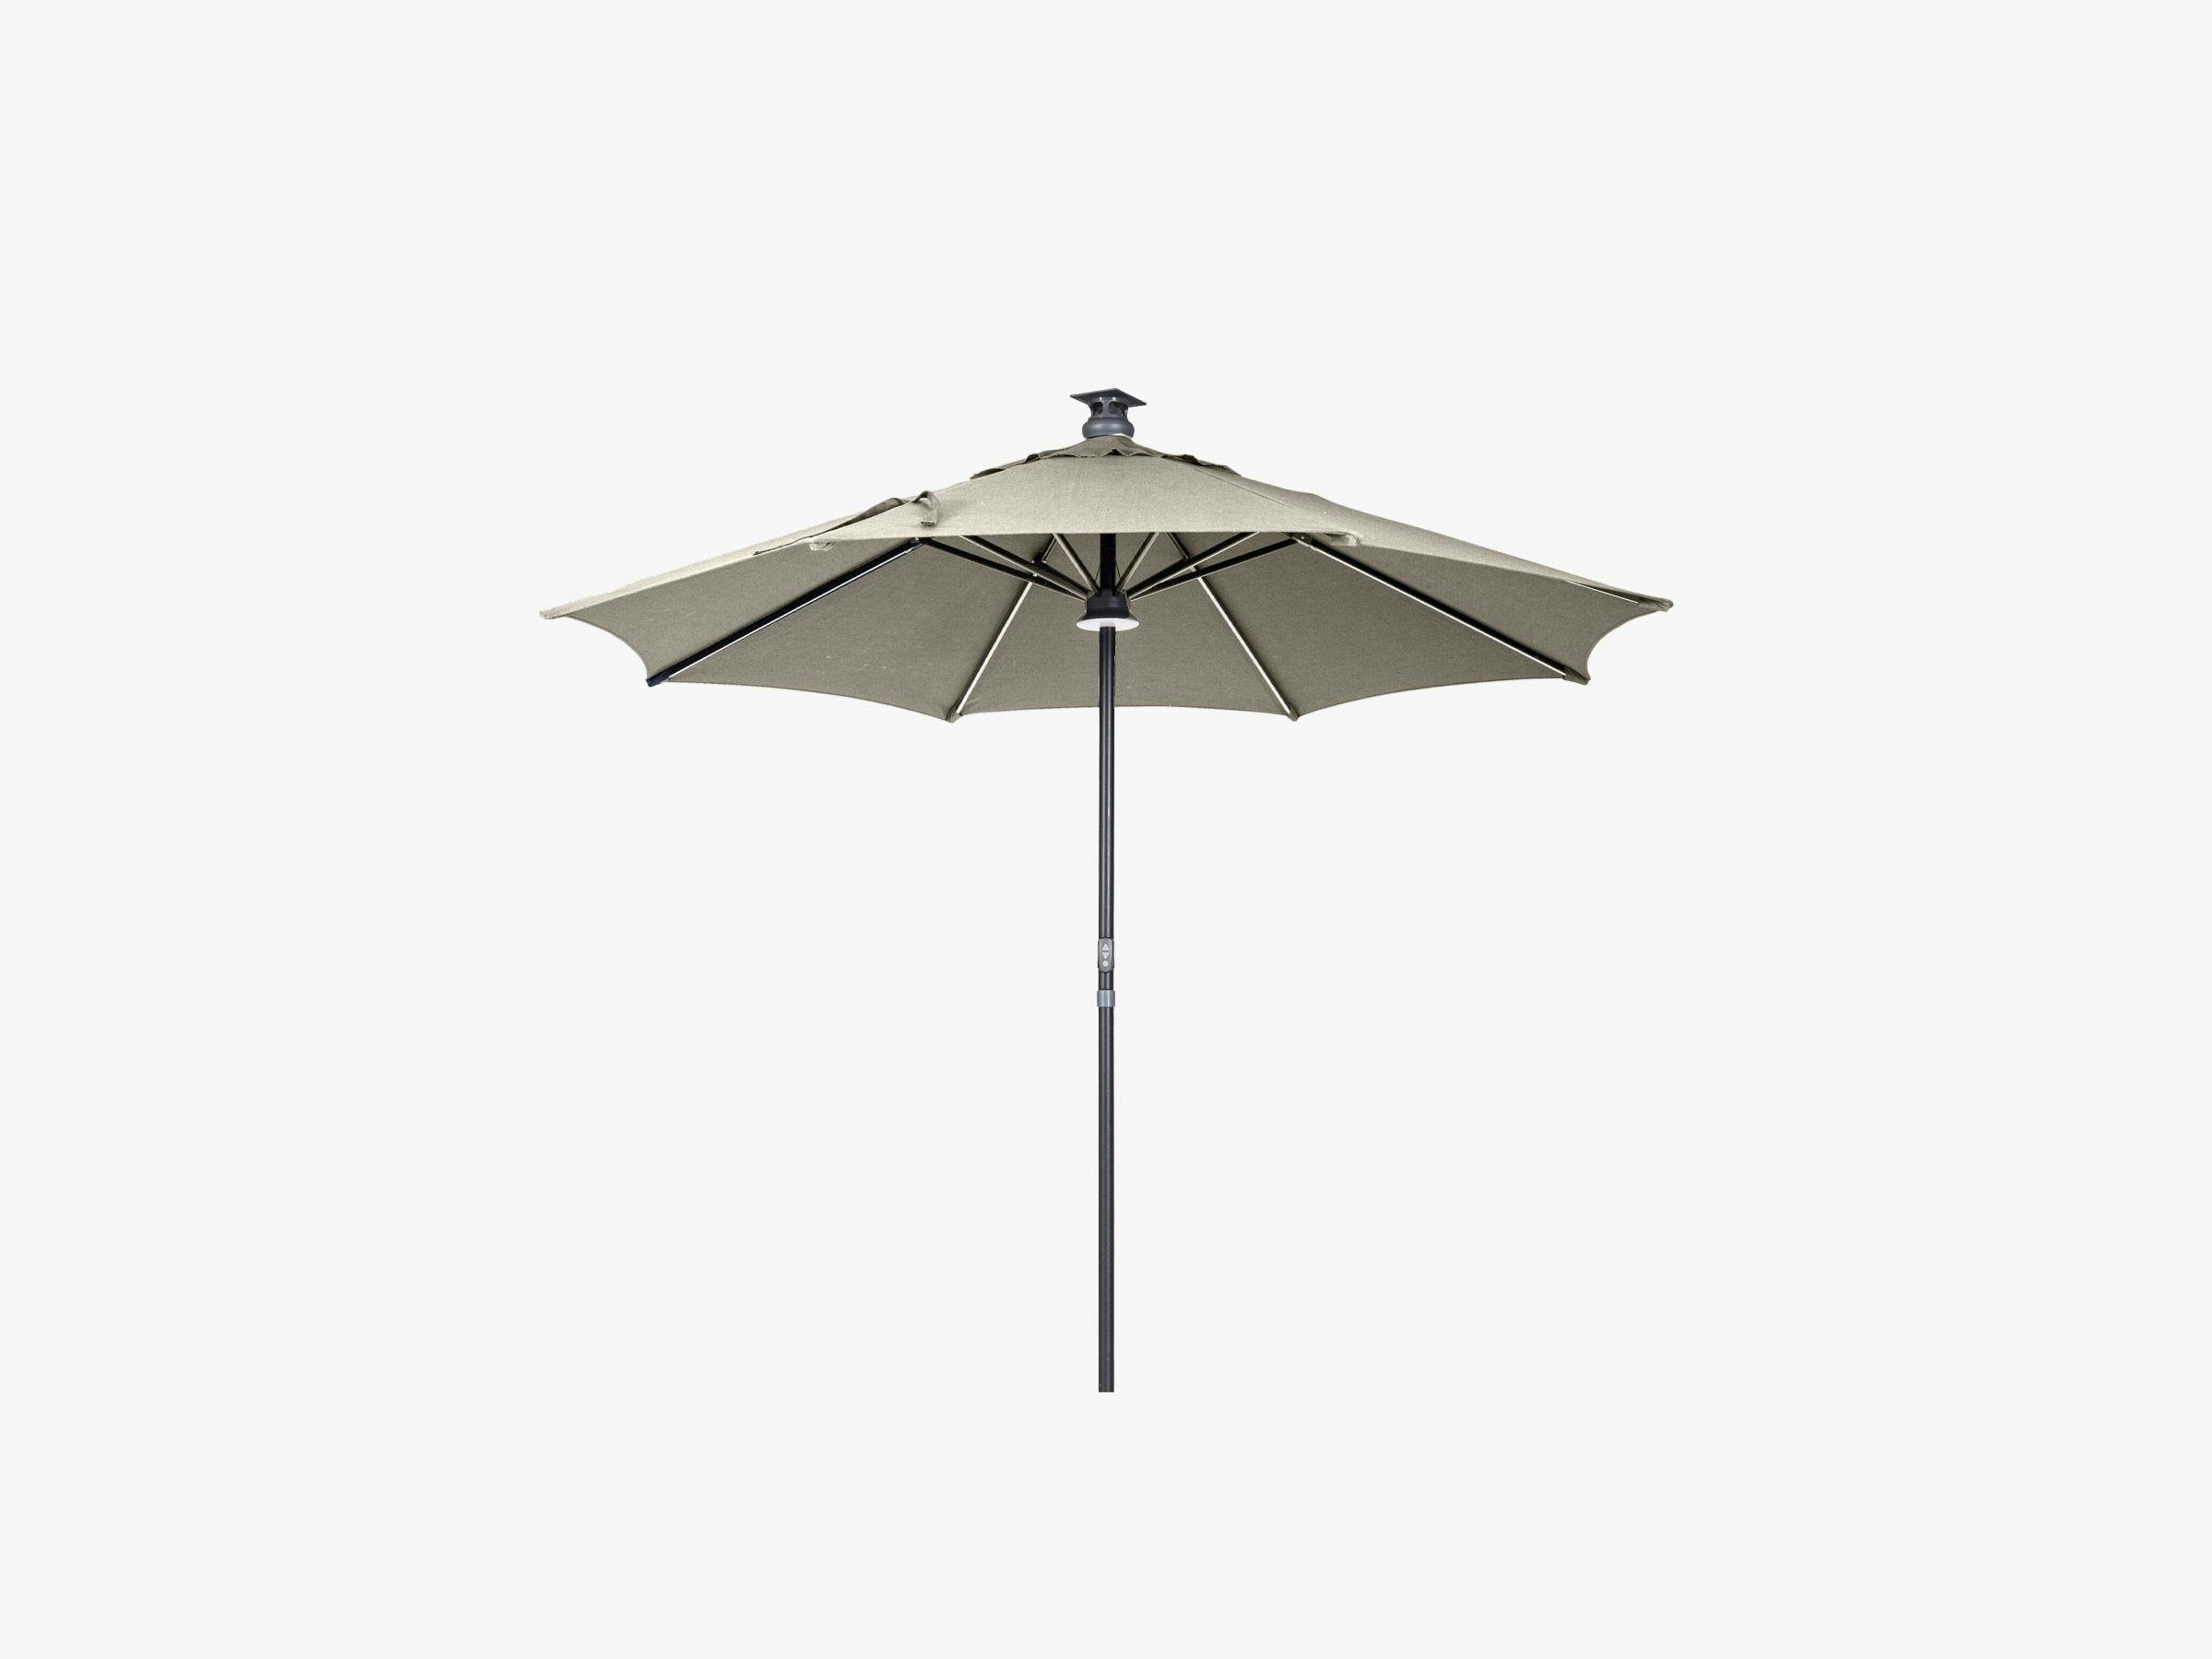 9' Paramount Smart Octagonal Umbrella (Sunbrella Dove fabric)